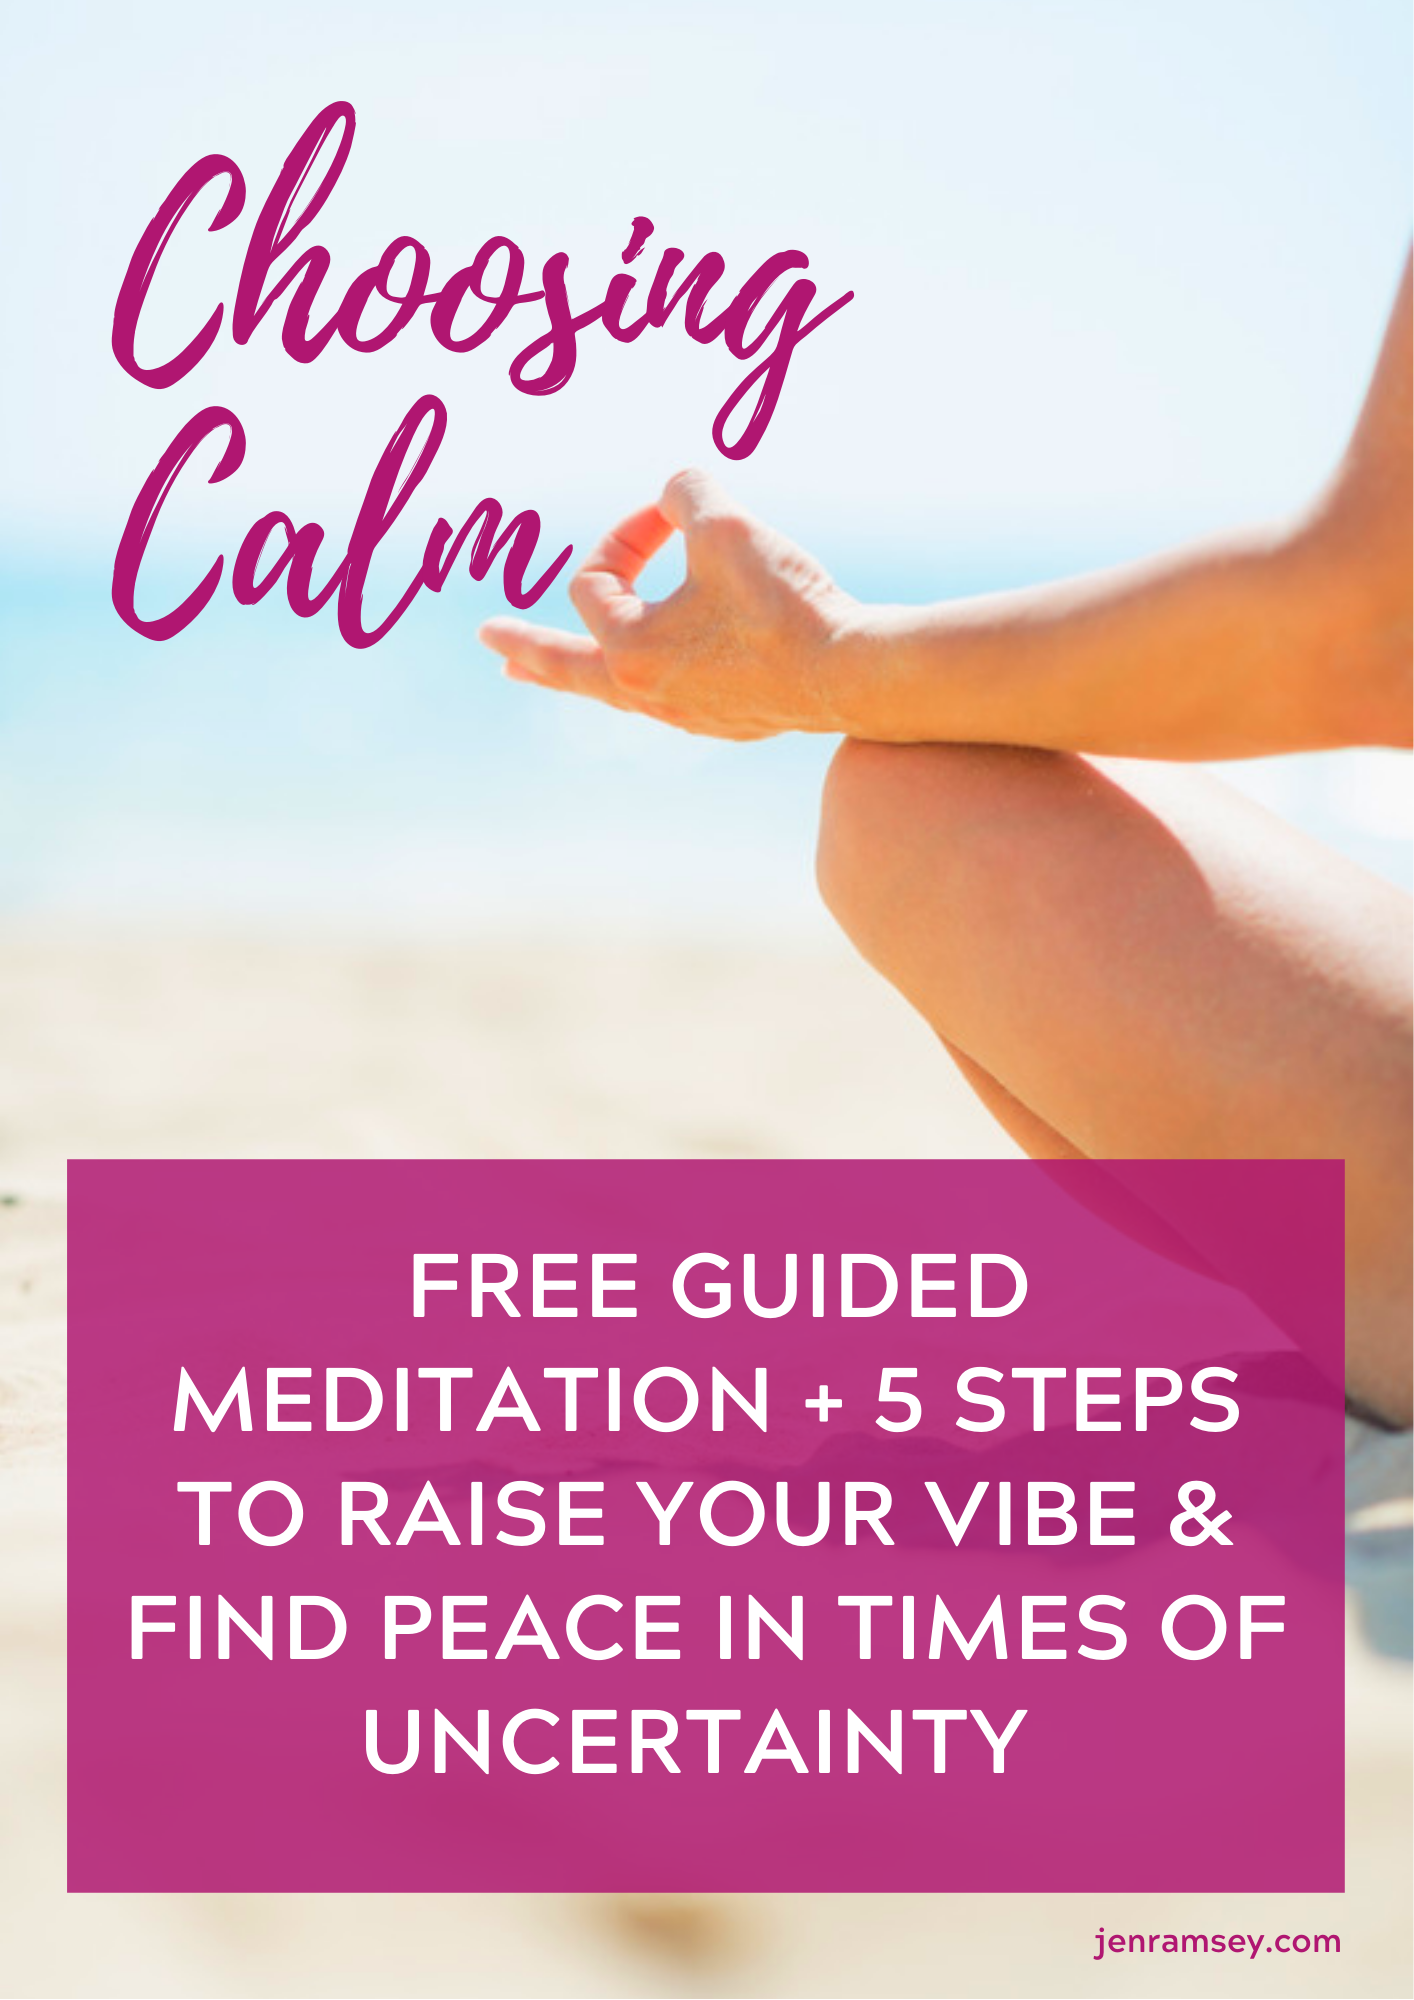 ChoosingCalm__MeditationCalmInUncertainTimes_JenRamsey_8dni0.png